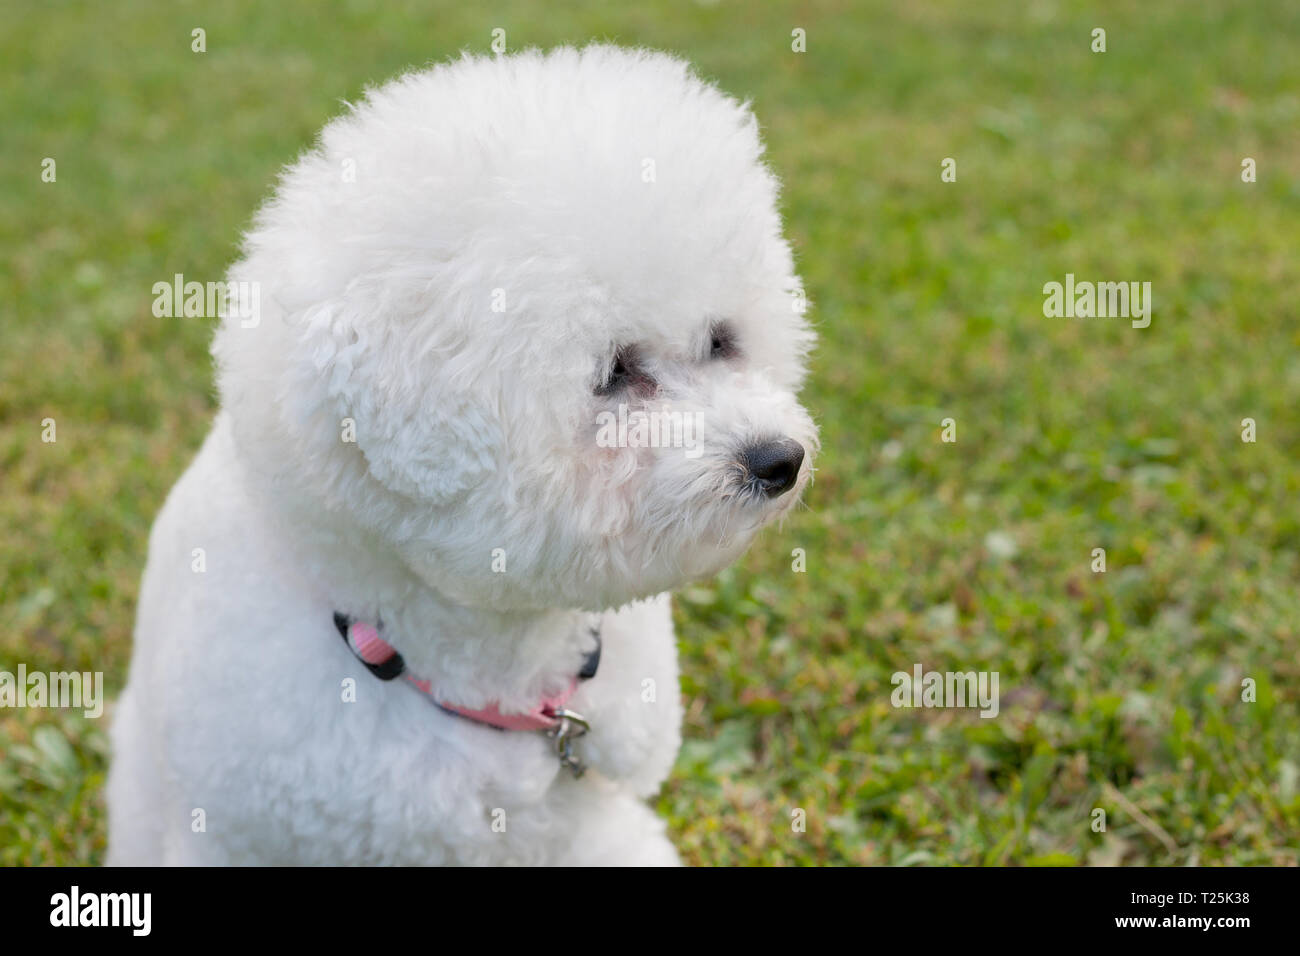 Cute bichon frise close up. Purebred dog. Pet animals. Stock Photo